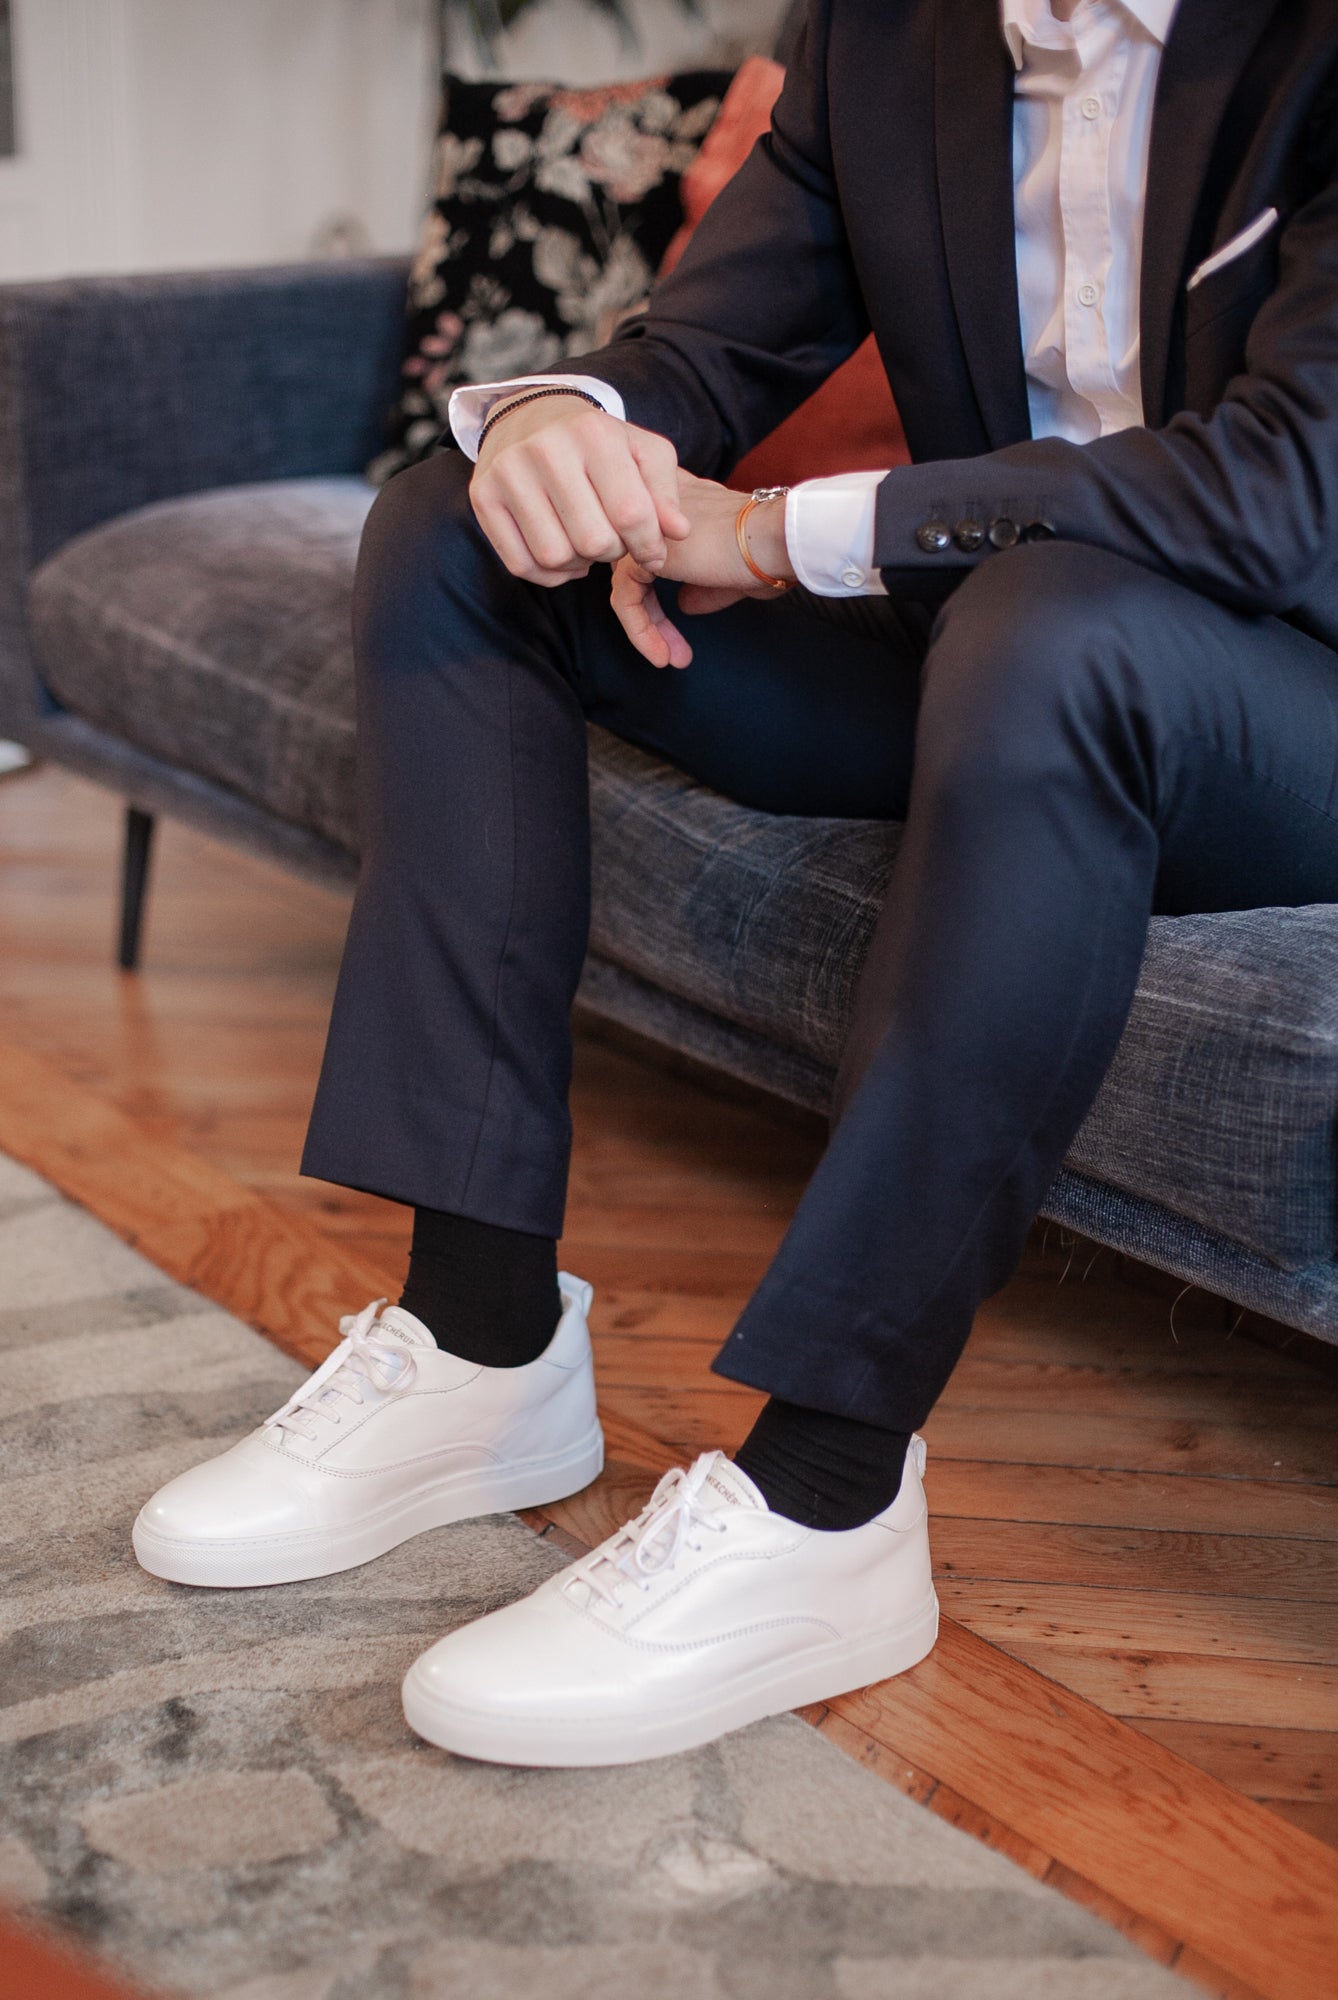 Tendance mode 2021 : ces baskets blanches ultra canon pour adopter la  sneaker minimaliste